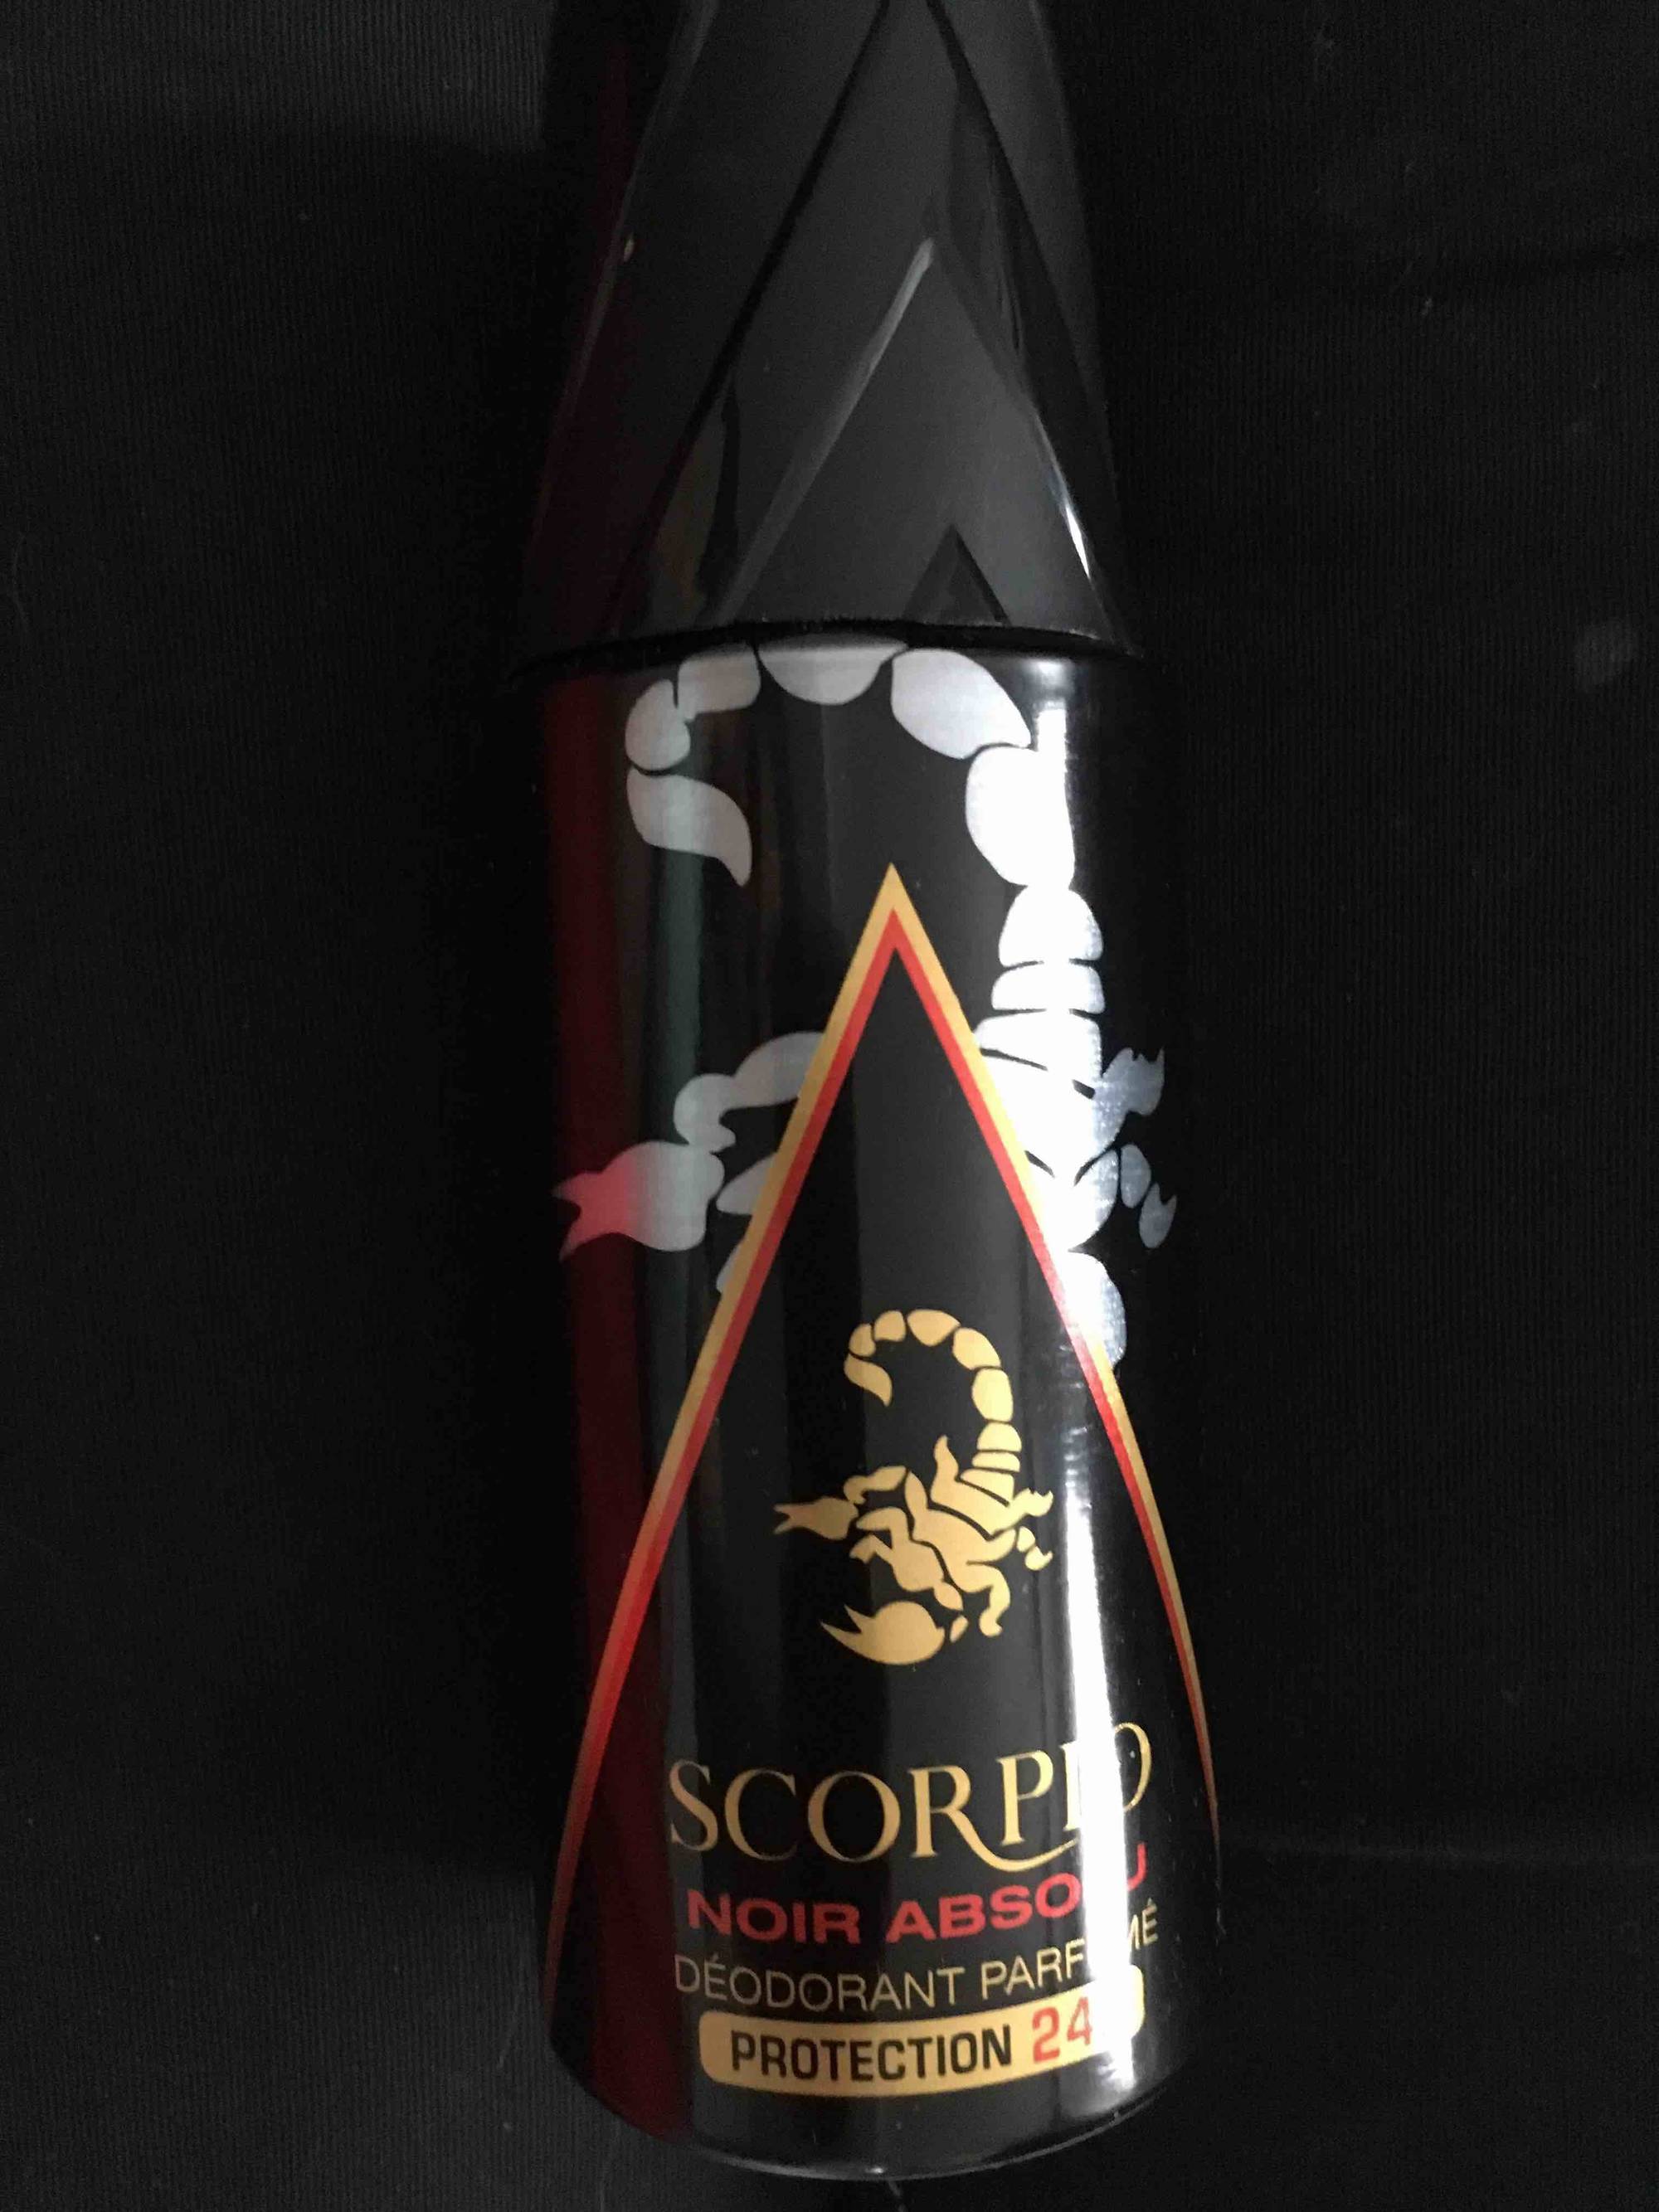 SCORPIO - Noir absolu - Déodorant parfumé